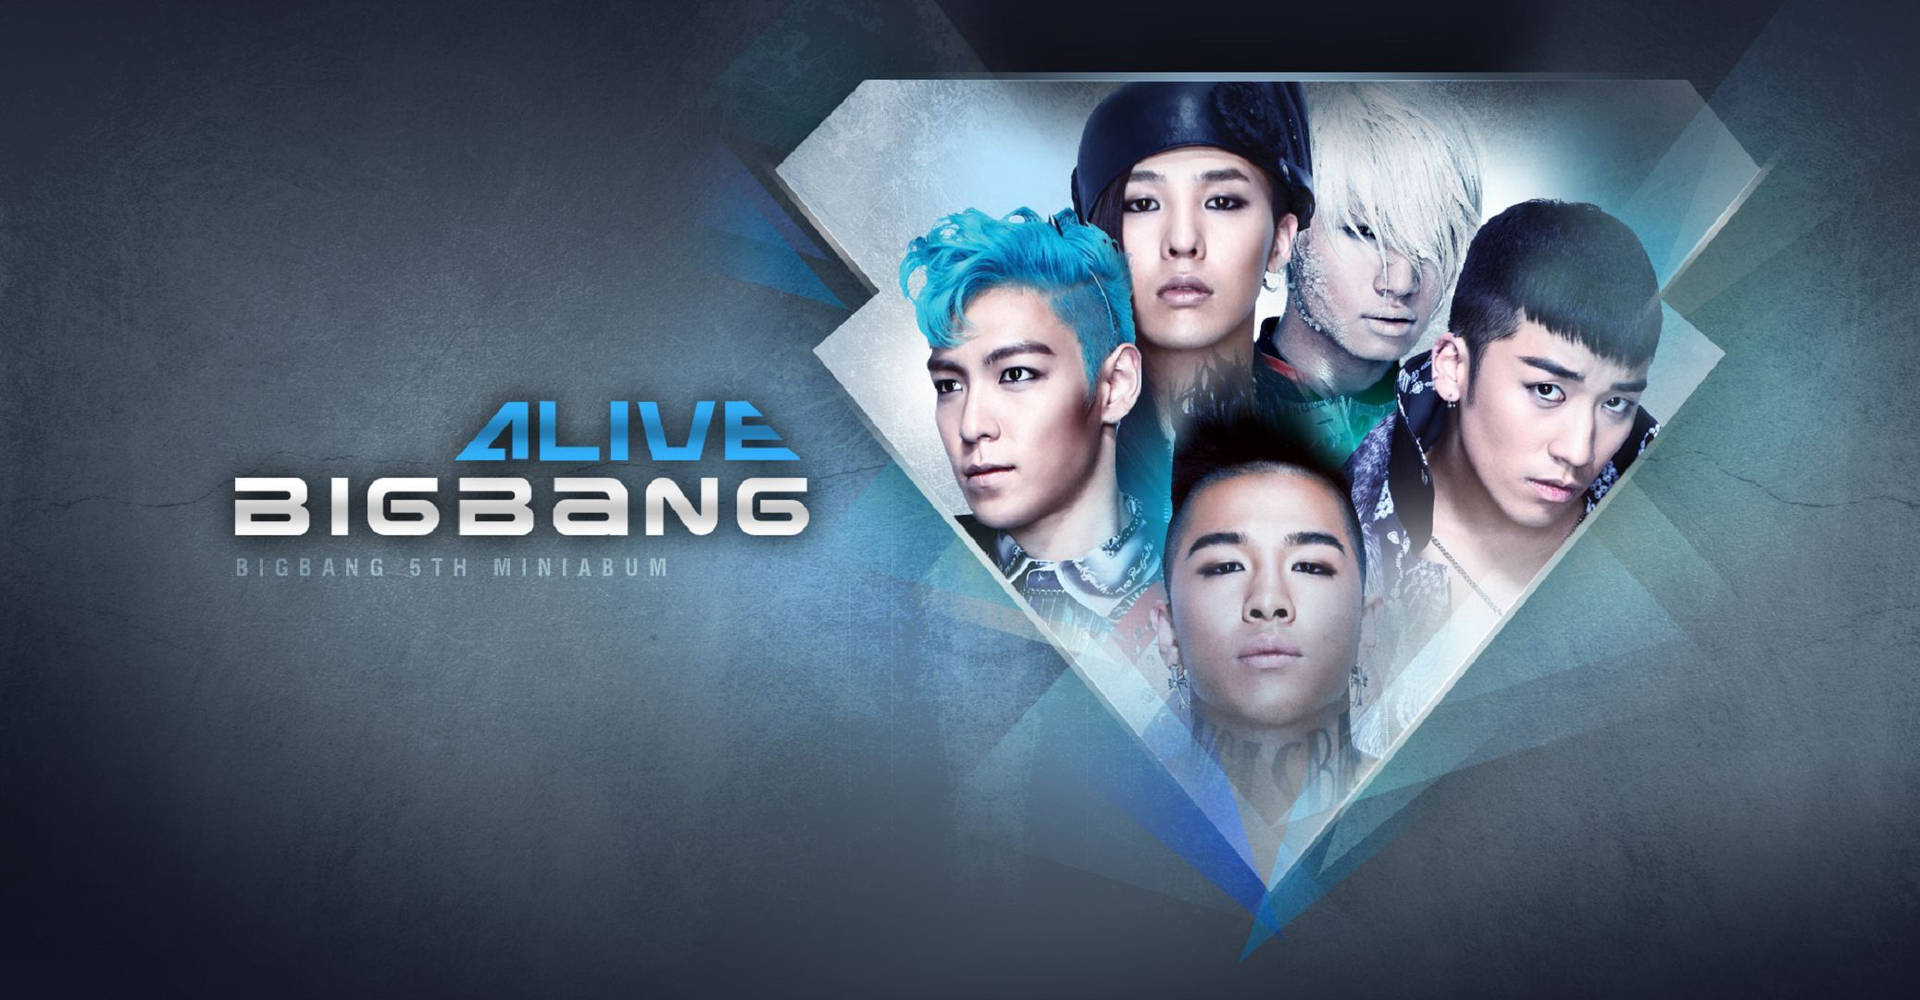 Bigbang Alive 5th Album Cover